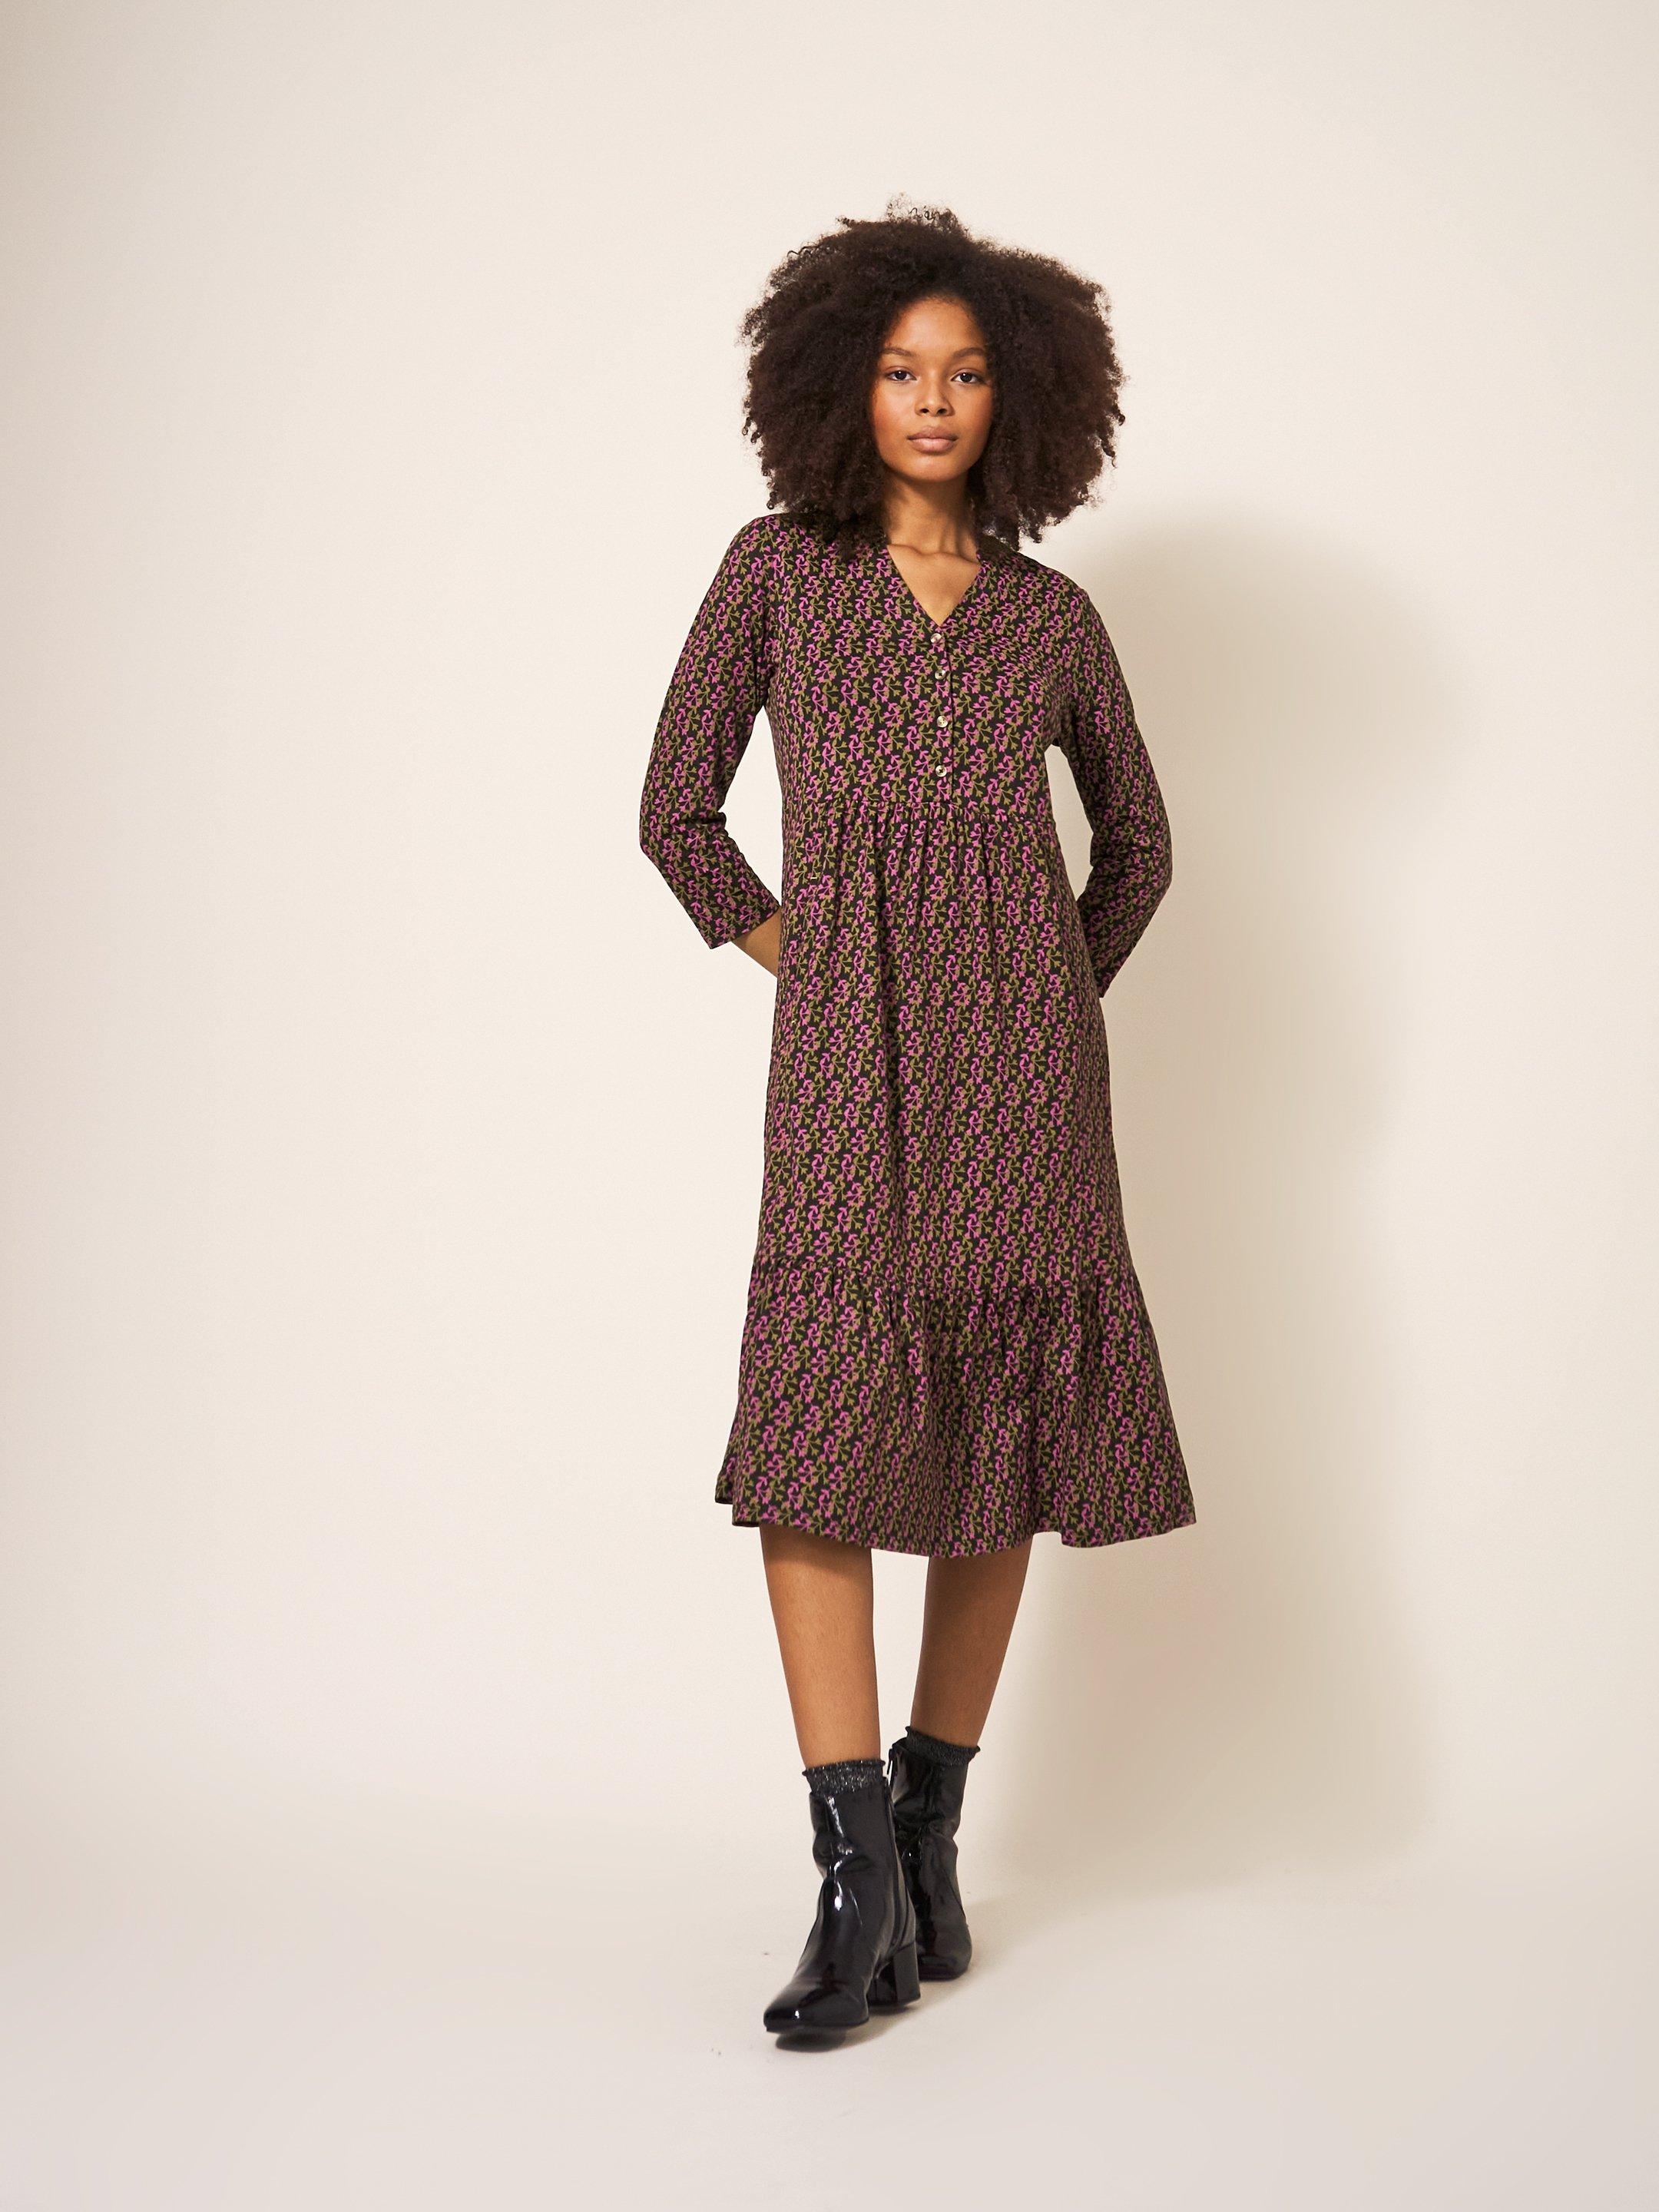 Naya Jersey Cotton Dress in BLK PR - MODEL DETAIL